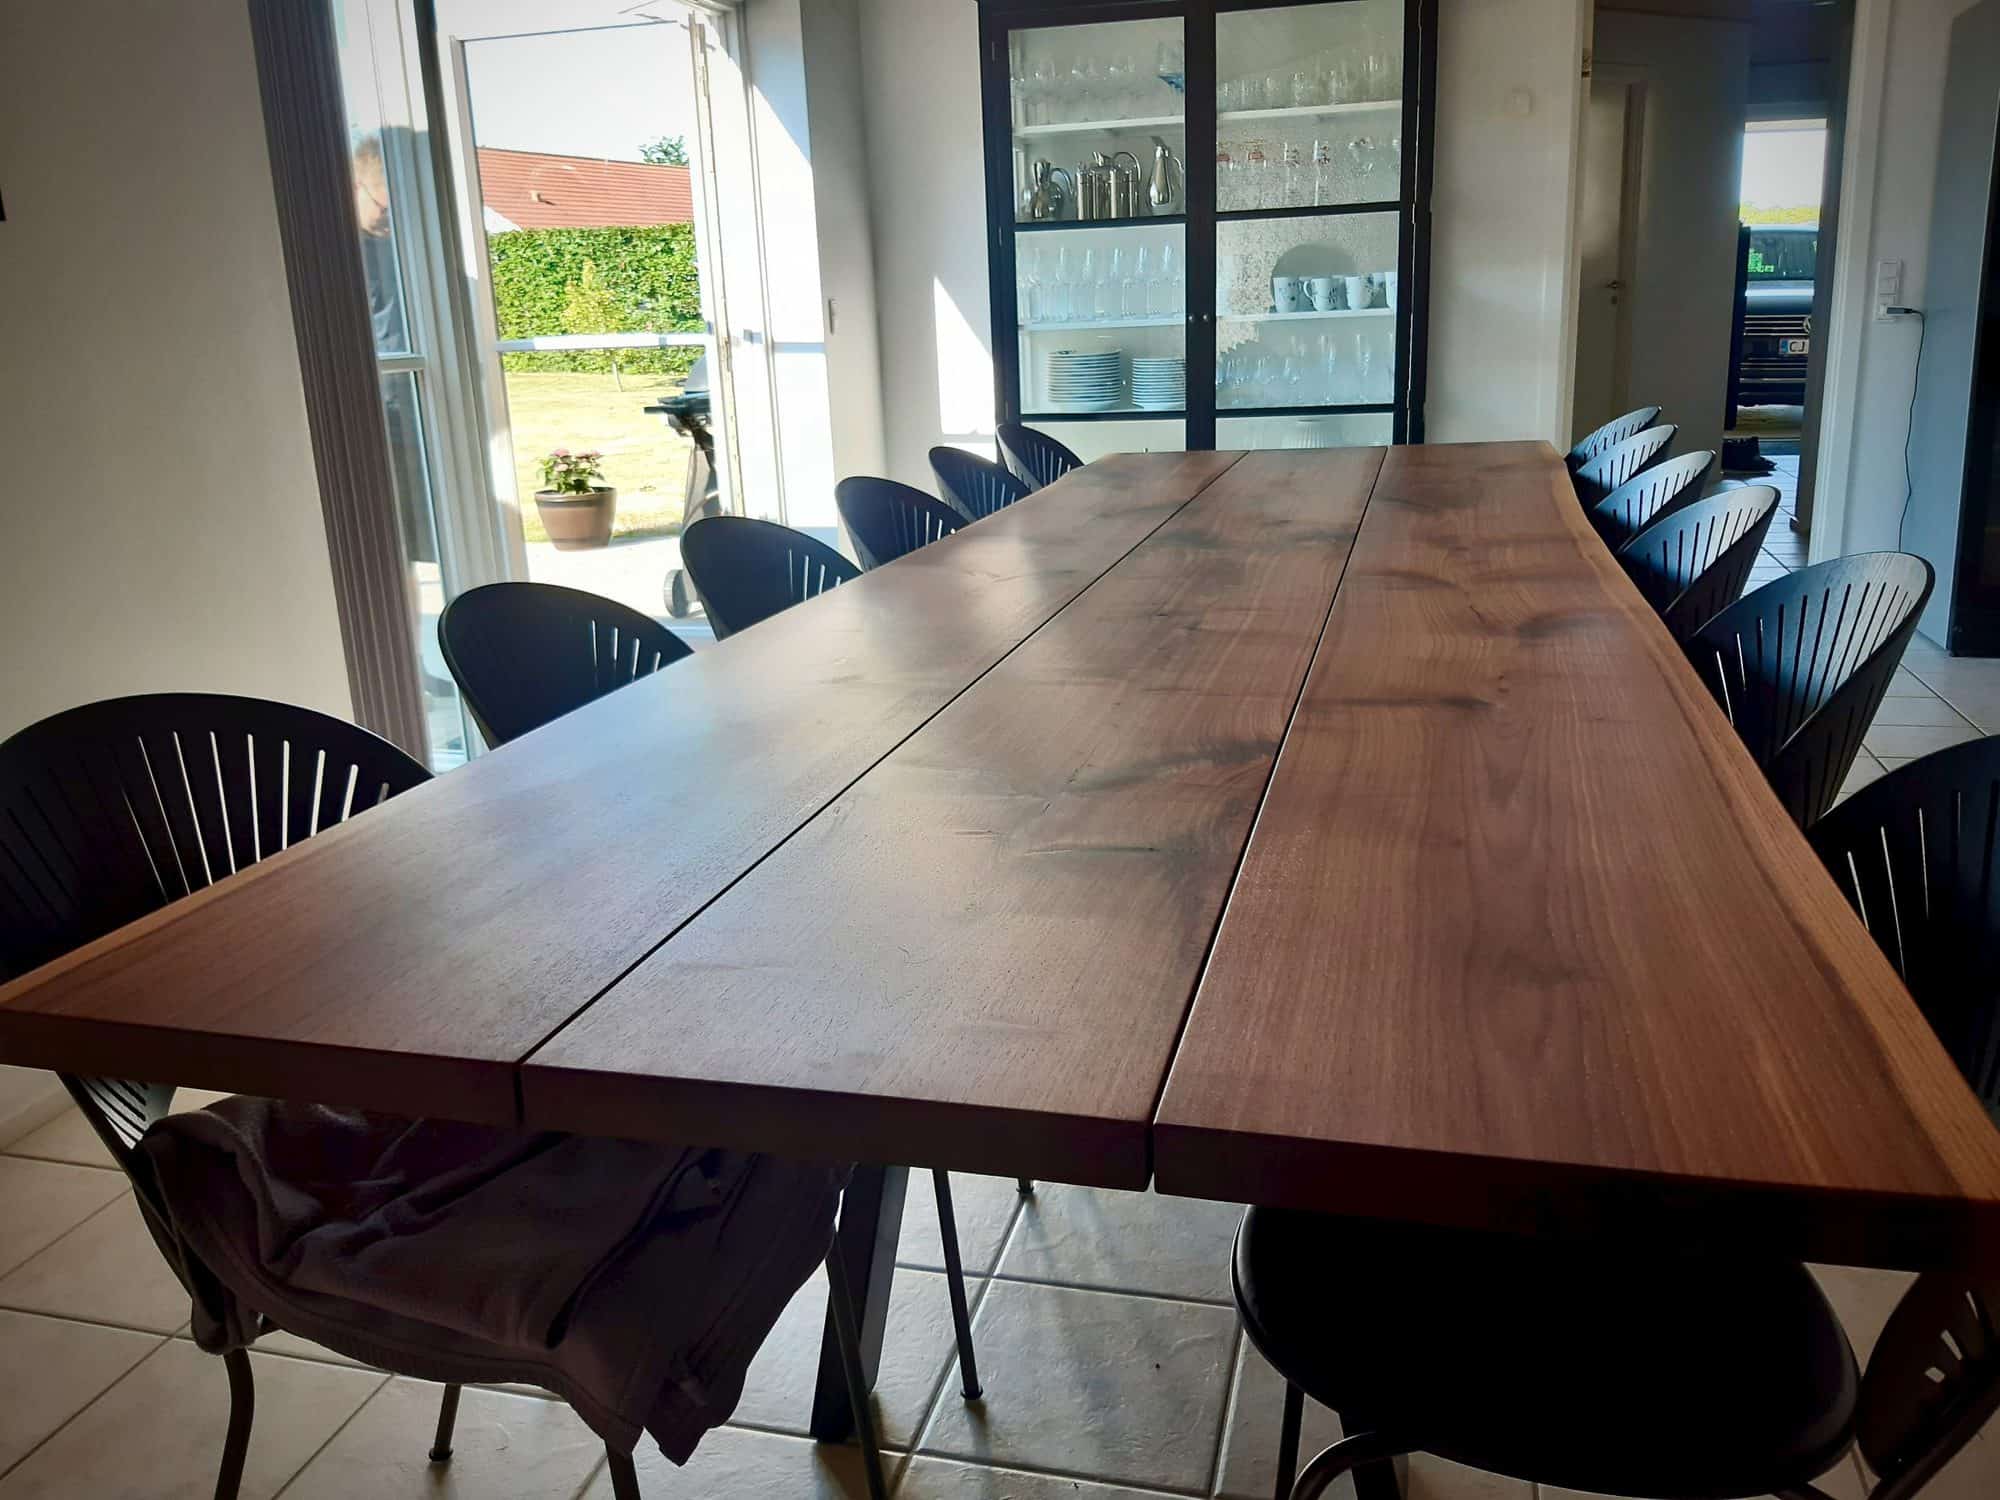 plankbord plankbord i trae Kaerbygård september 2020 8 skalat